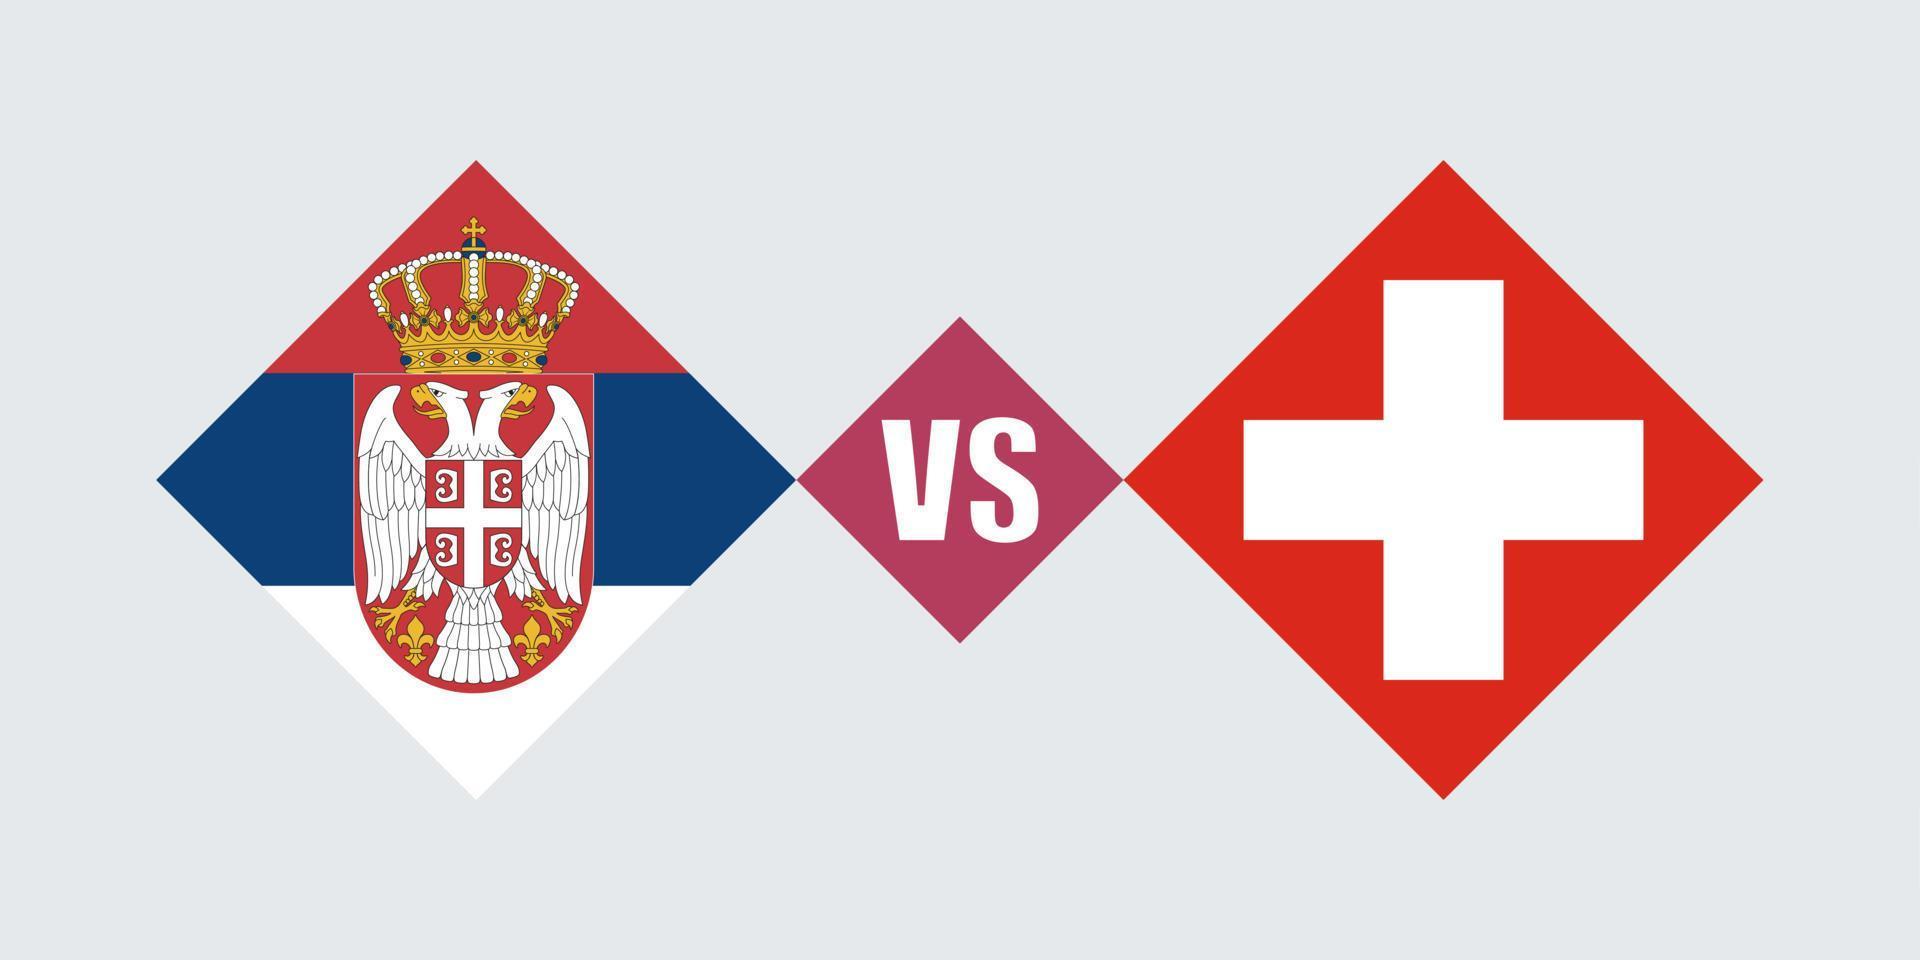 Serbia vs Switzerland flag concept. Vector illustration.